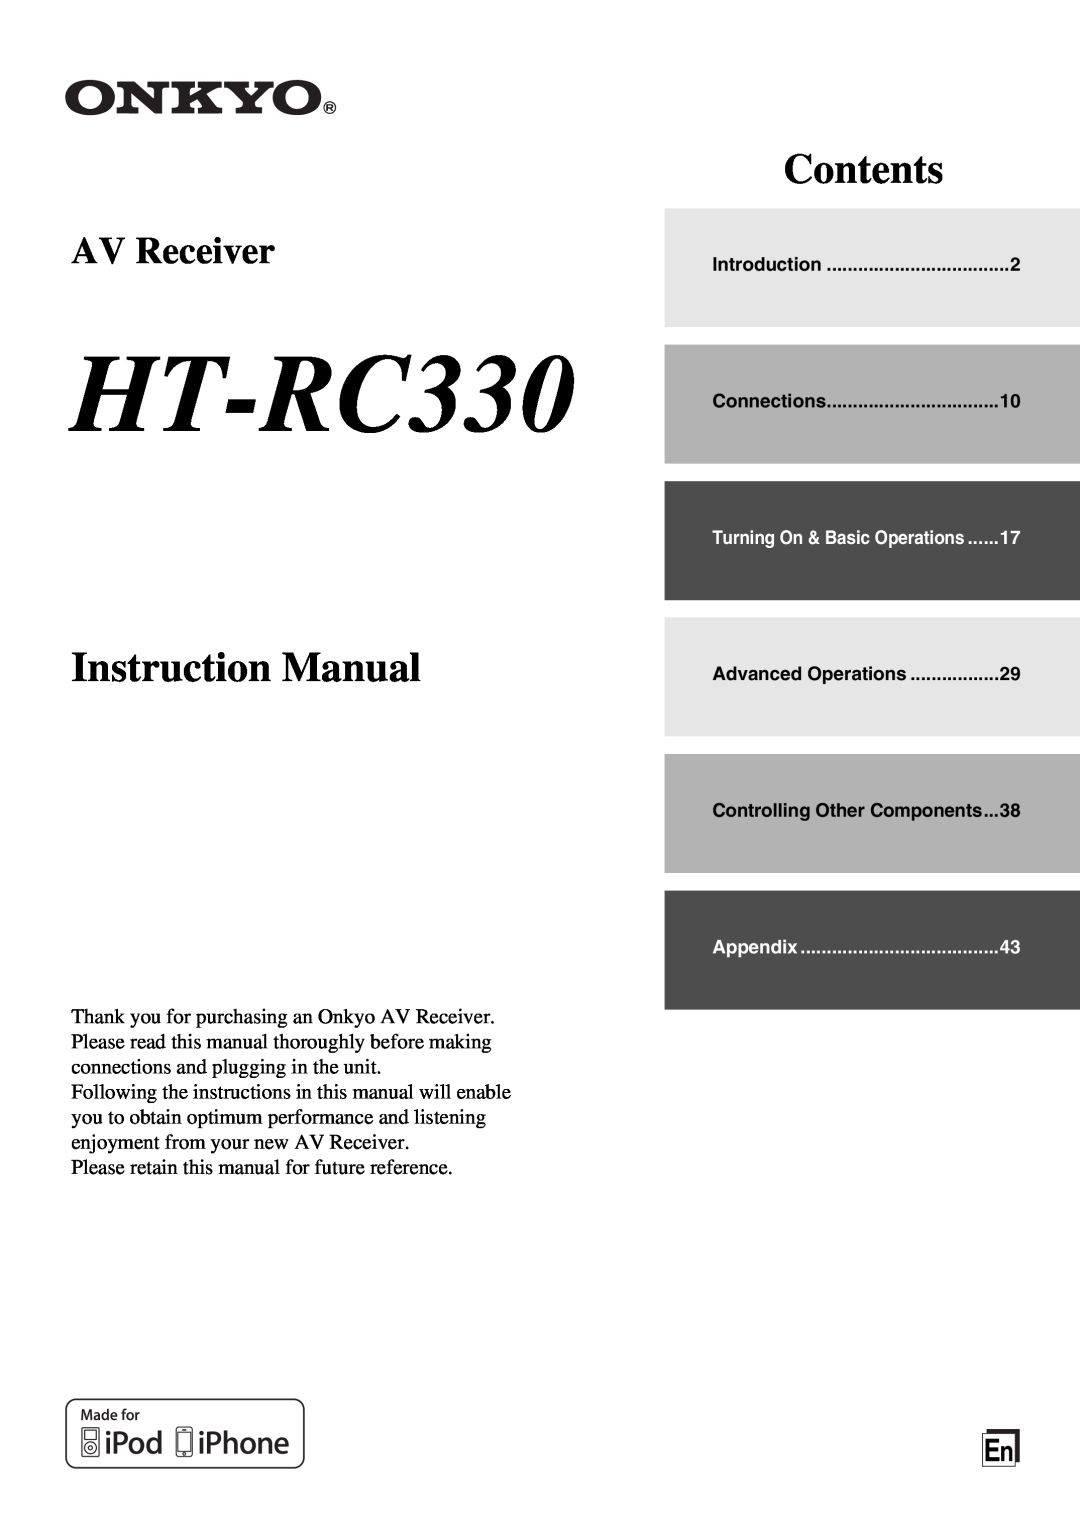 Onkyo HT-RC330 instruction manual Contents, AV Receiver 